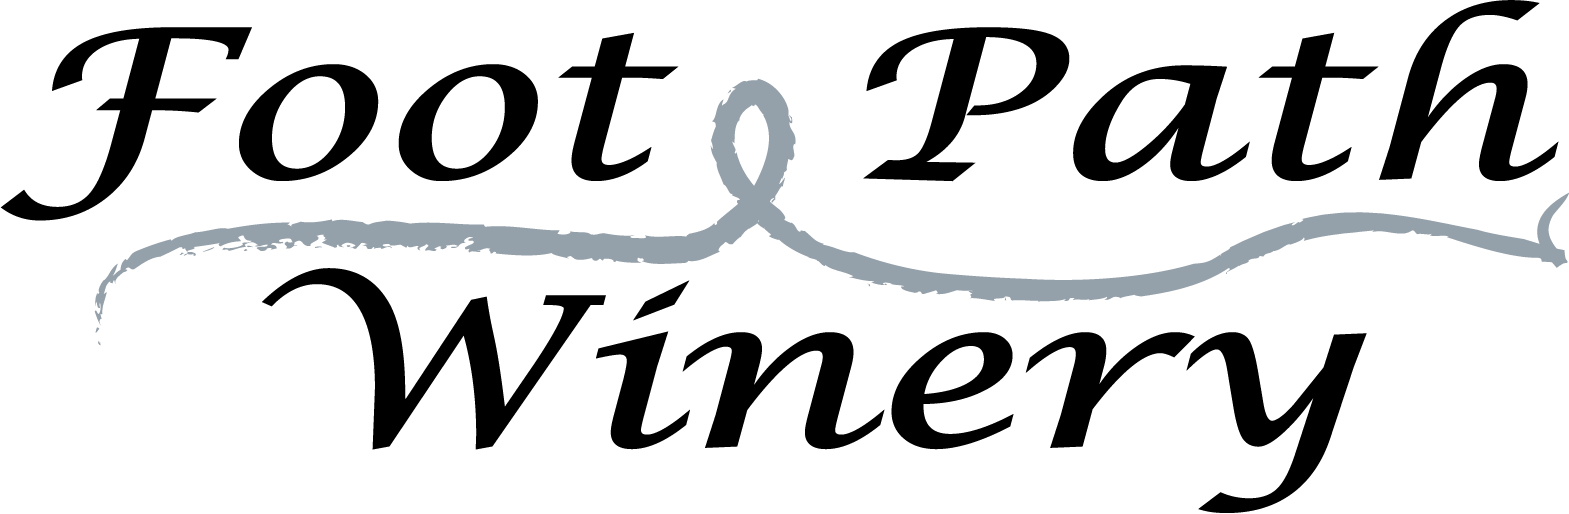 footpath_logo.png